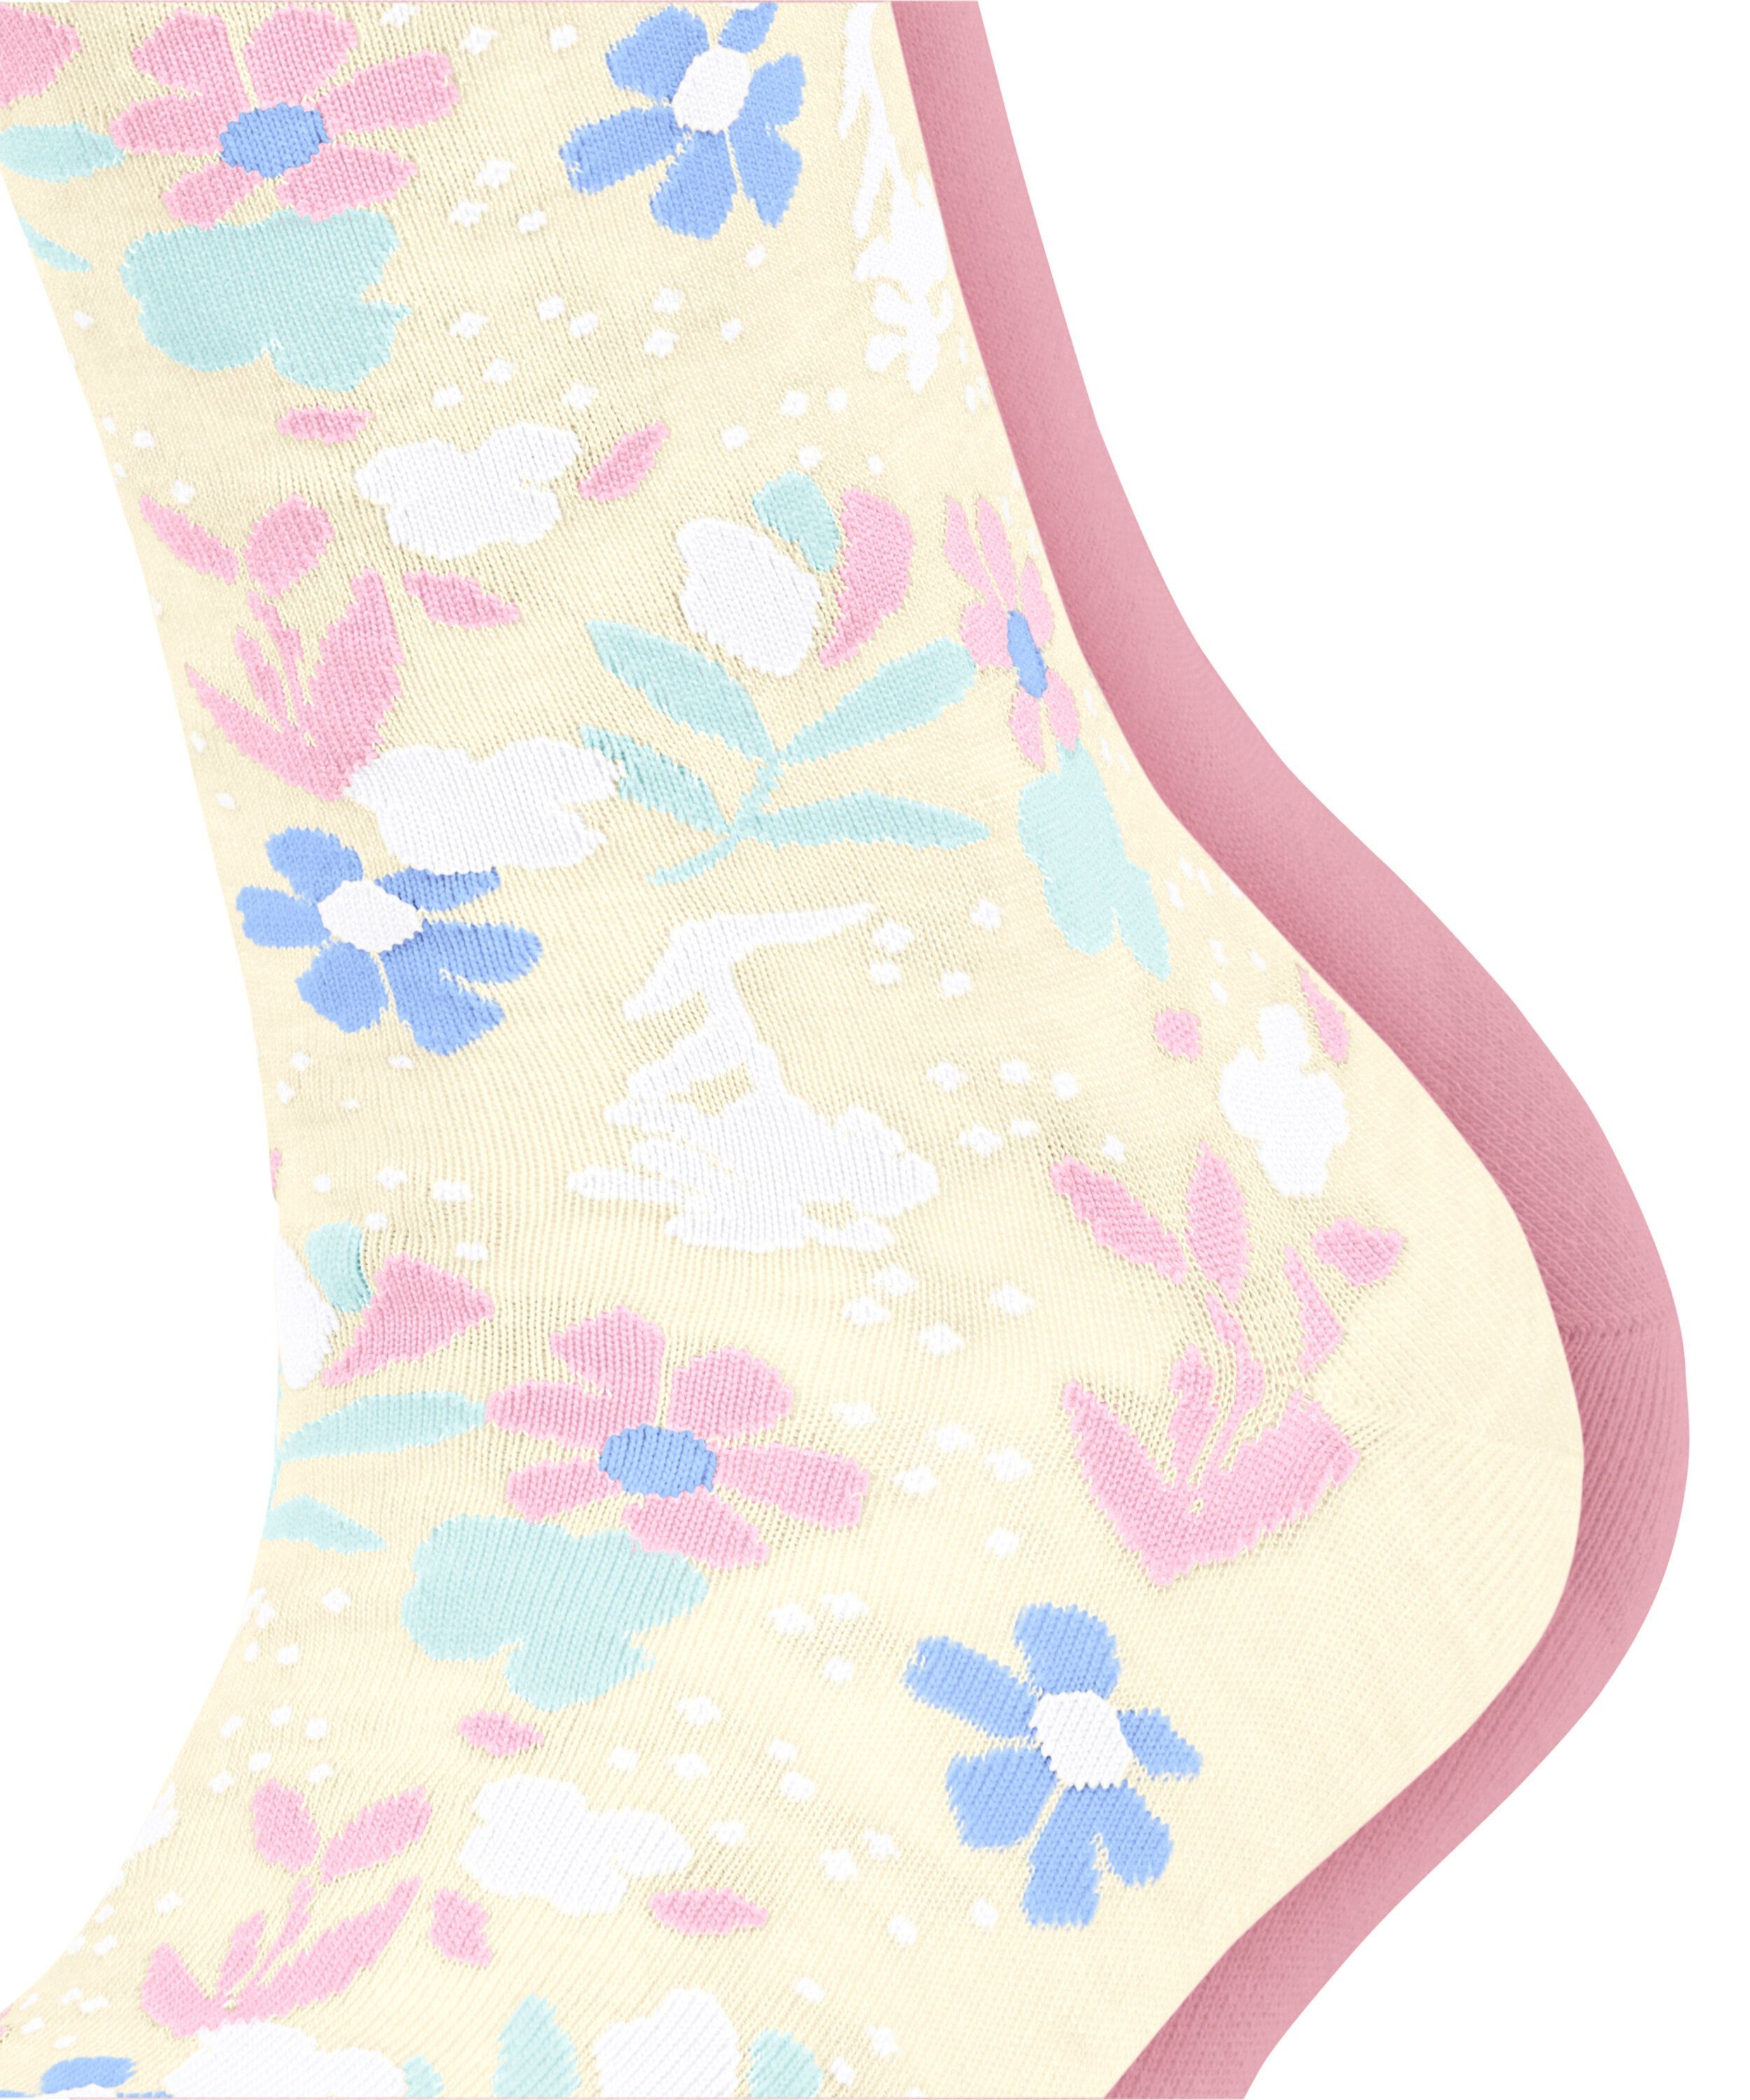 Socken Flower (2-Paar) 2-Pack Fresh (0020) Summer Esprit sortiment